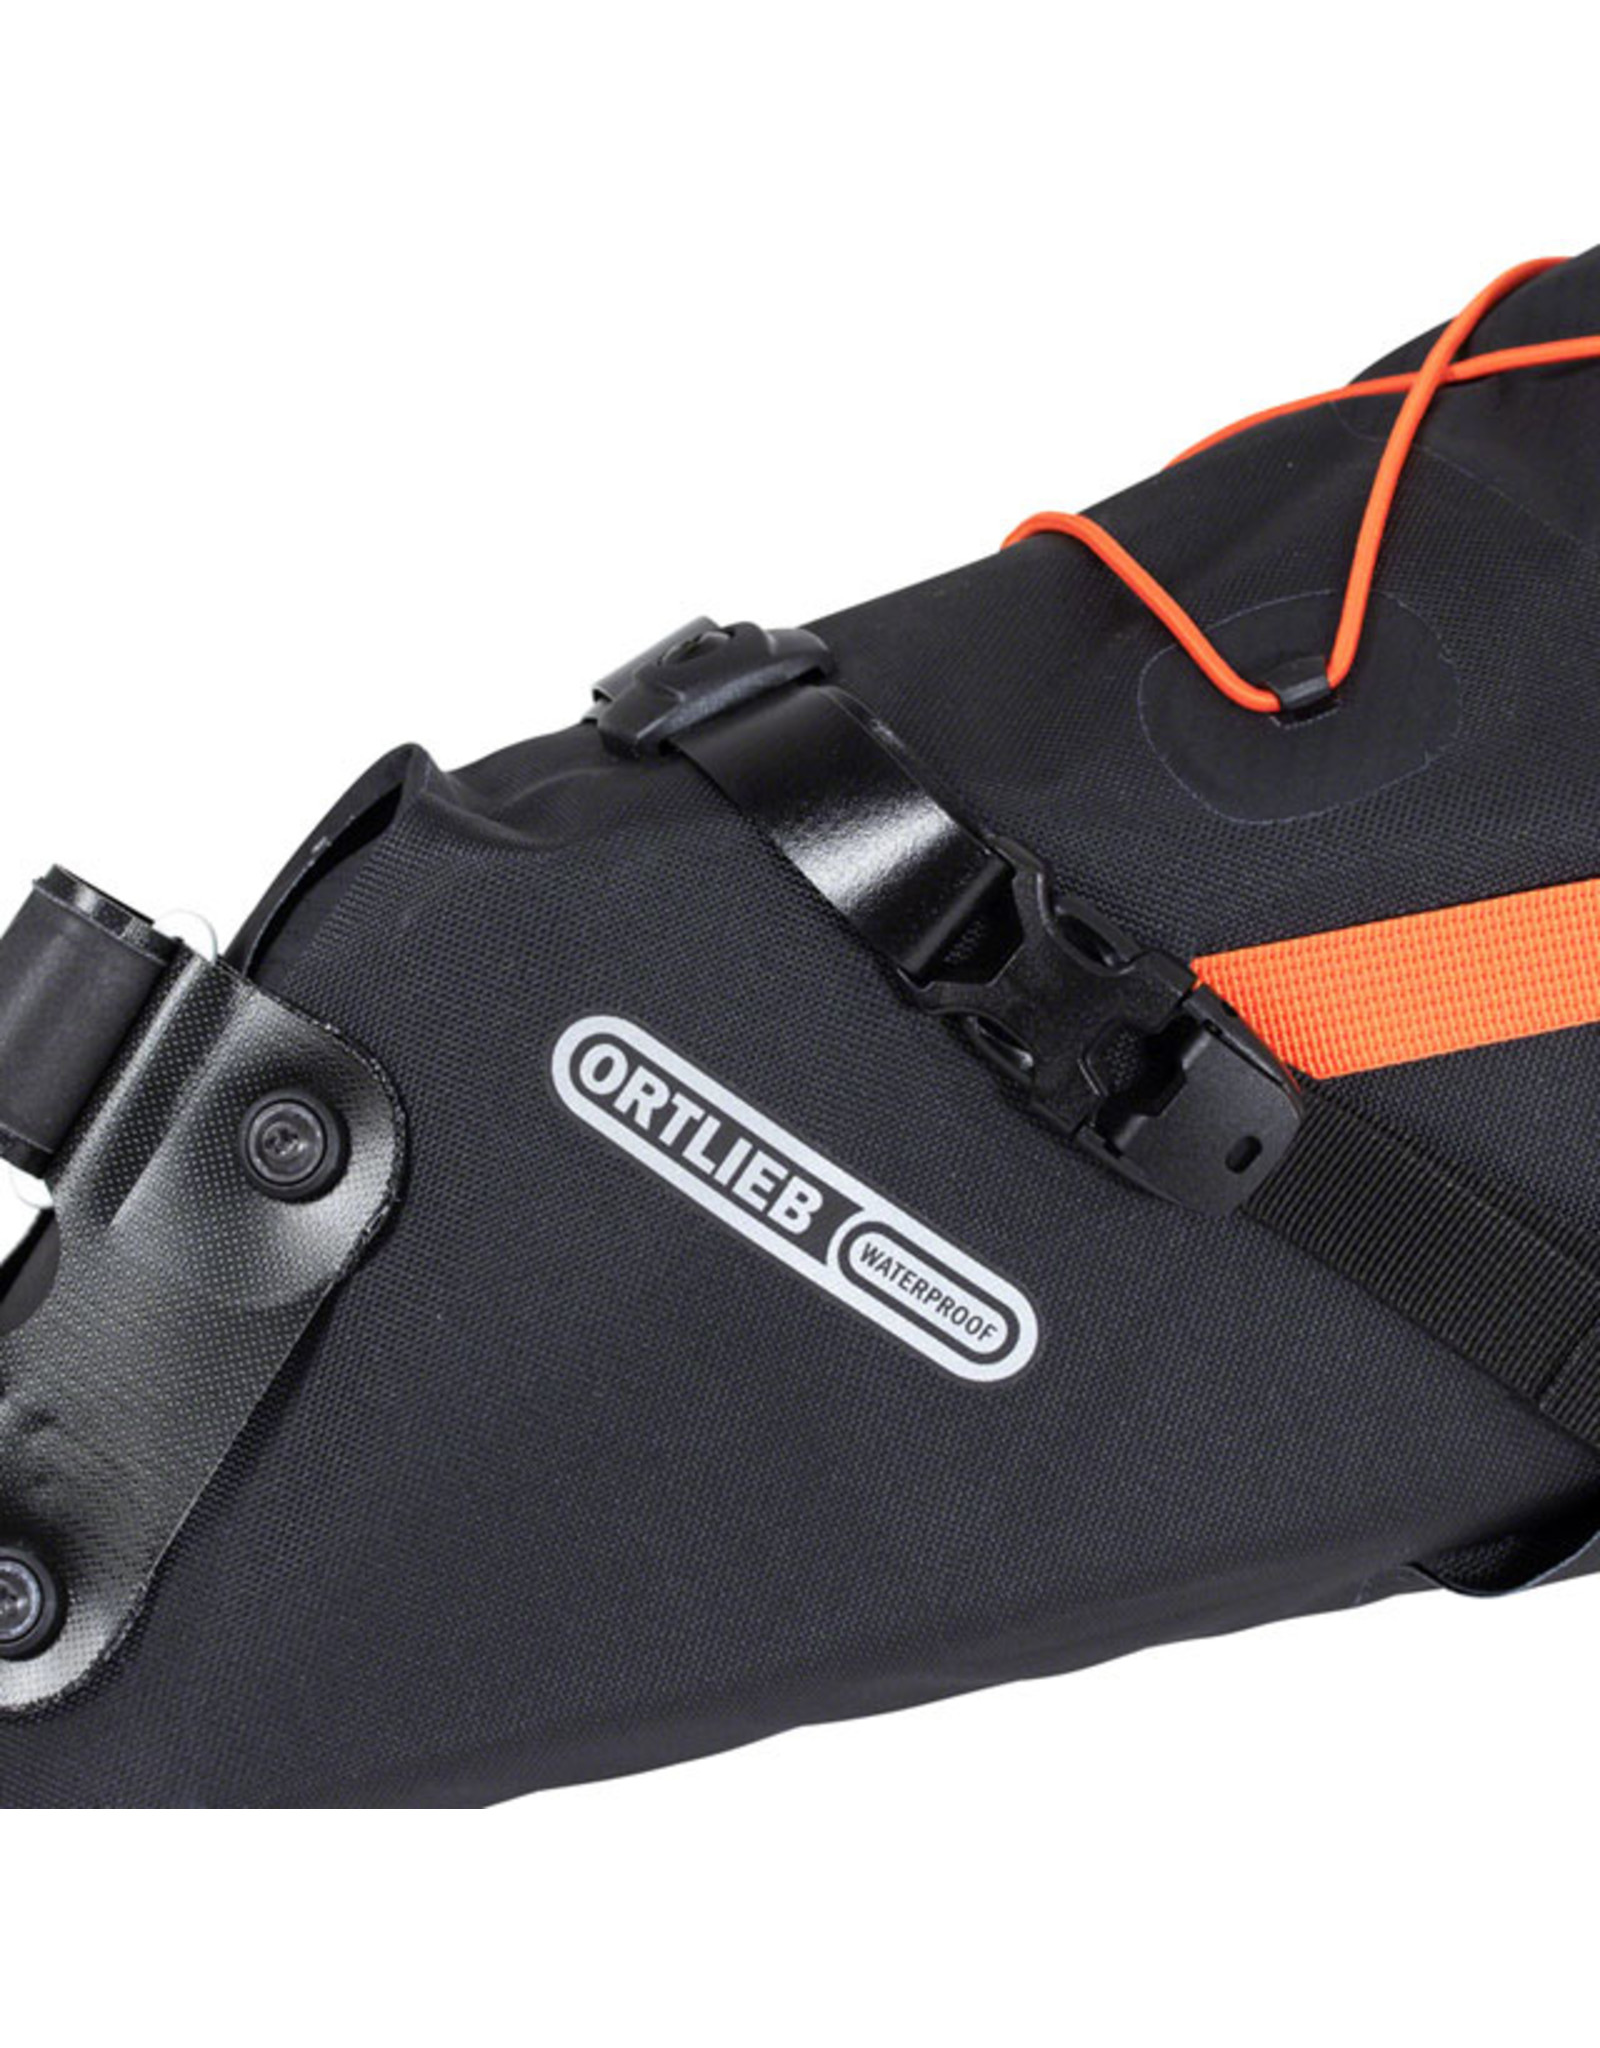 Ortlieb Ortlieb Bikepacking Seat Pack - 16.5L, Black